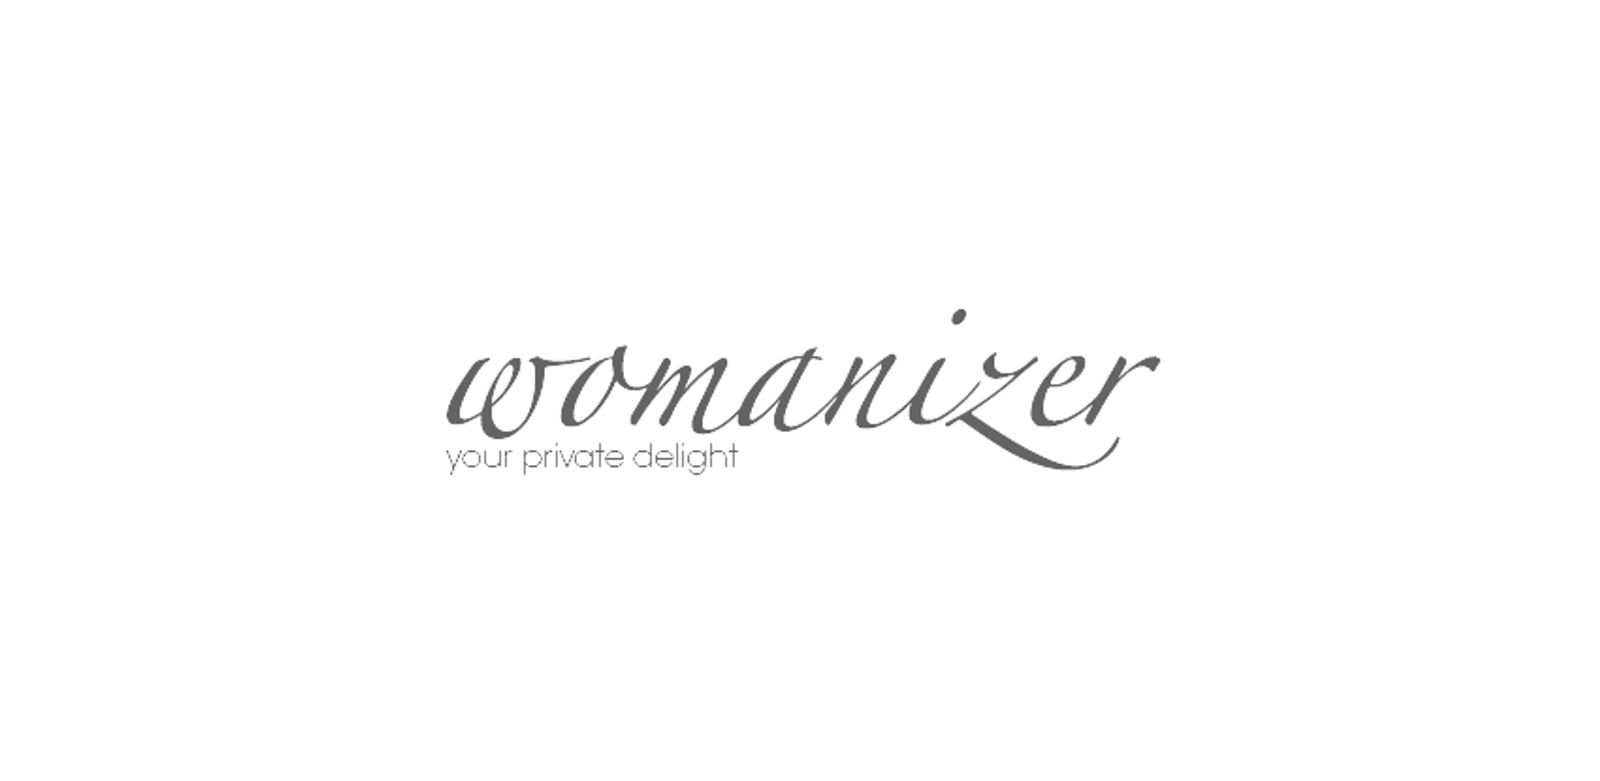 New Design Released For epi24’s Womanizer